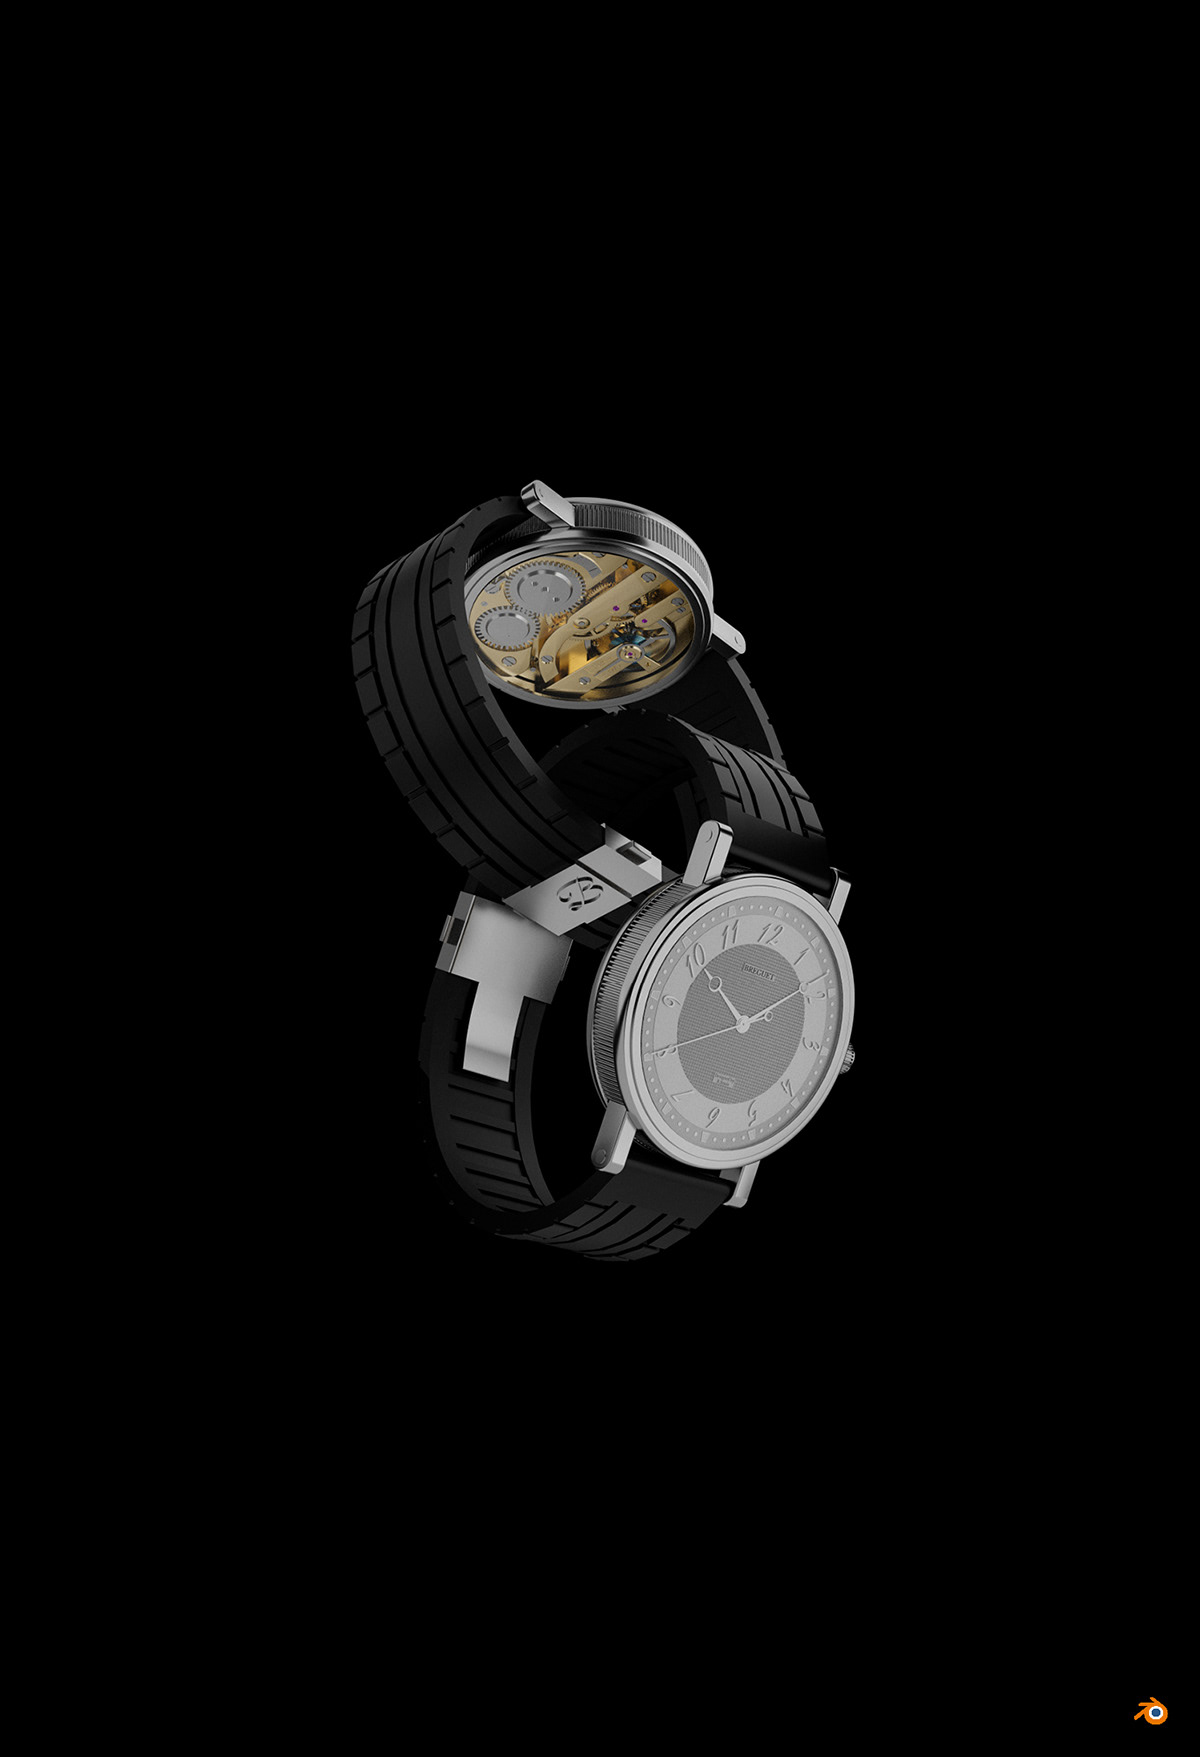 blender Alias Modeling Alias porduct design Automotive design design Dyson Ford GT Watches watch design